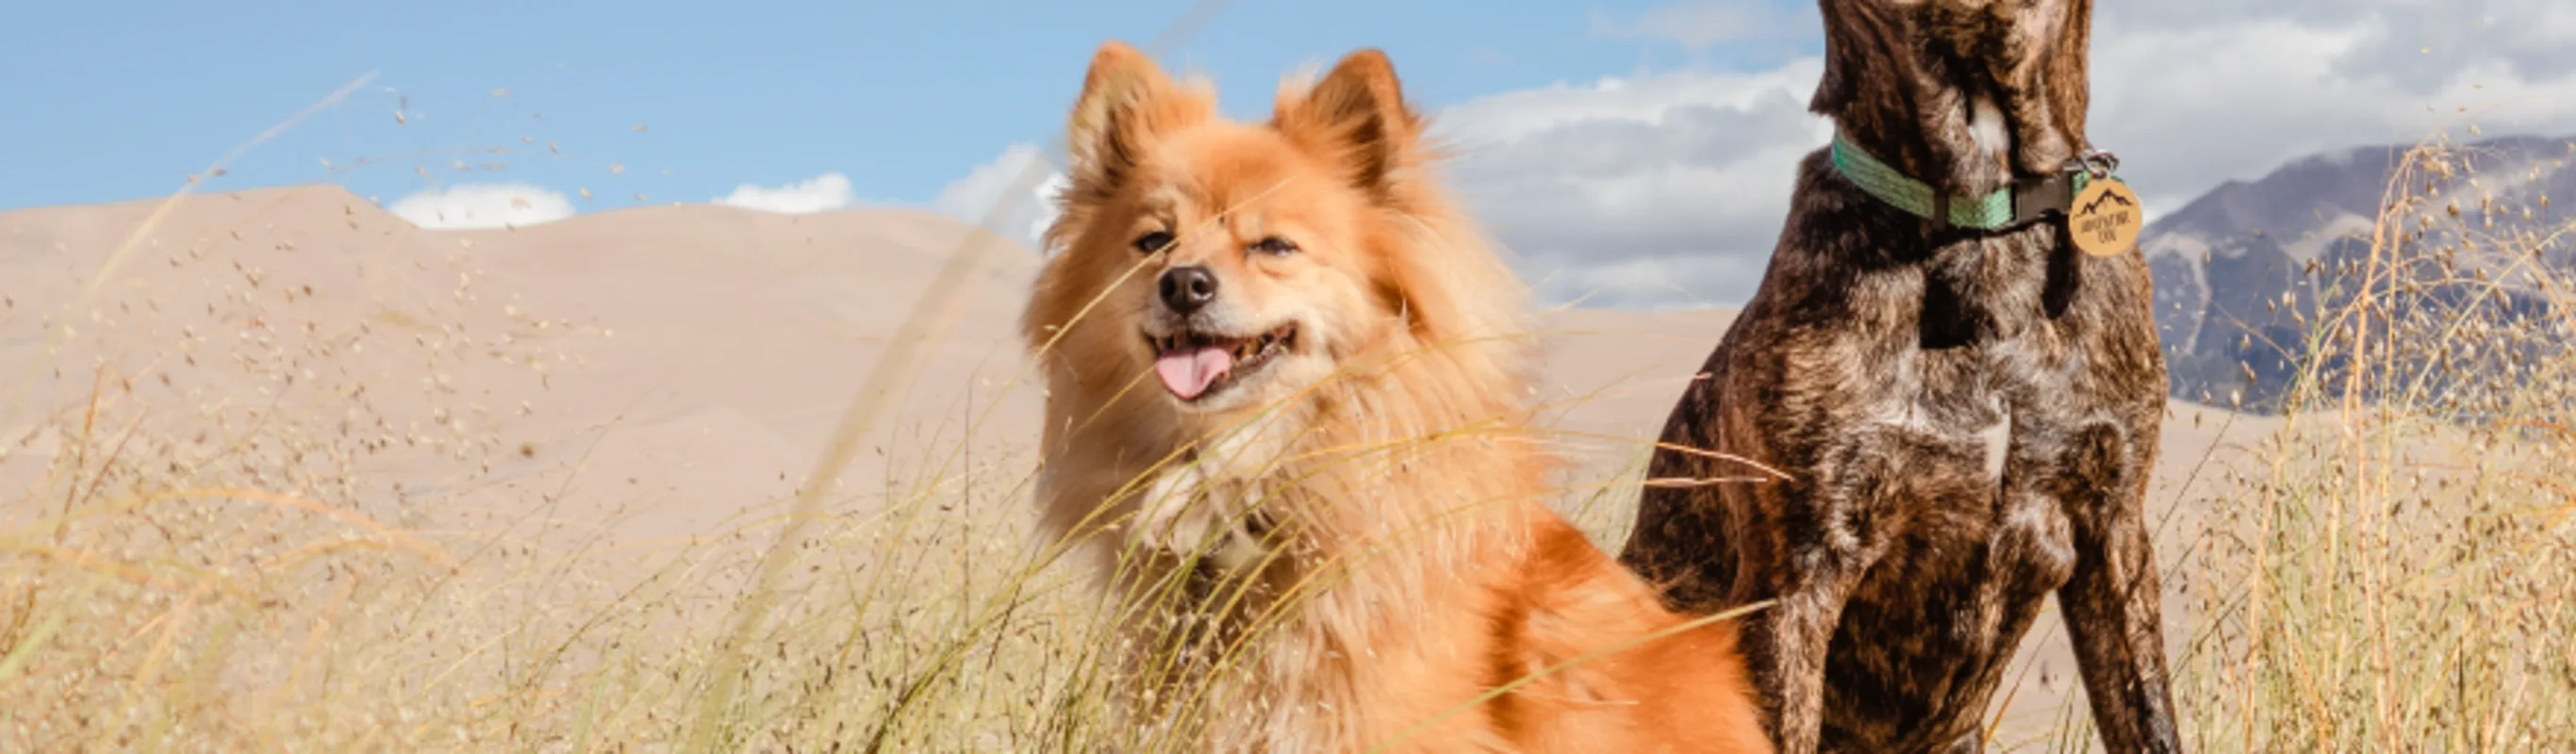 Two Dogs in Desert